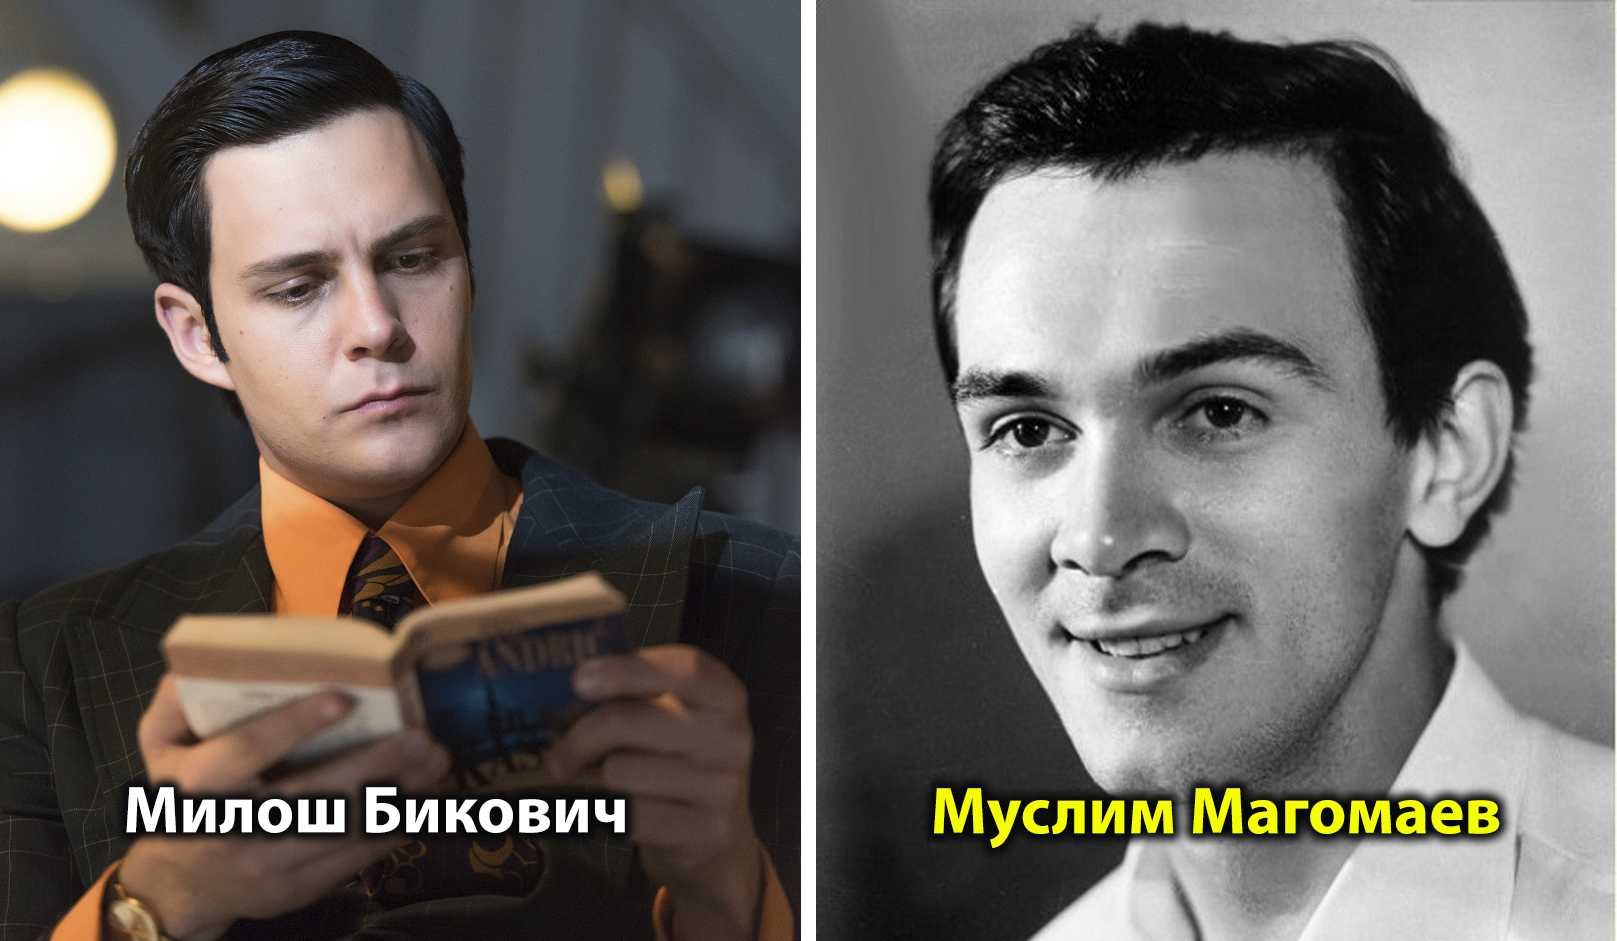 Почему в холоп 2 озвучивал. Милош Бикович Магомаев.